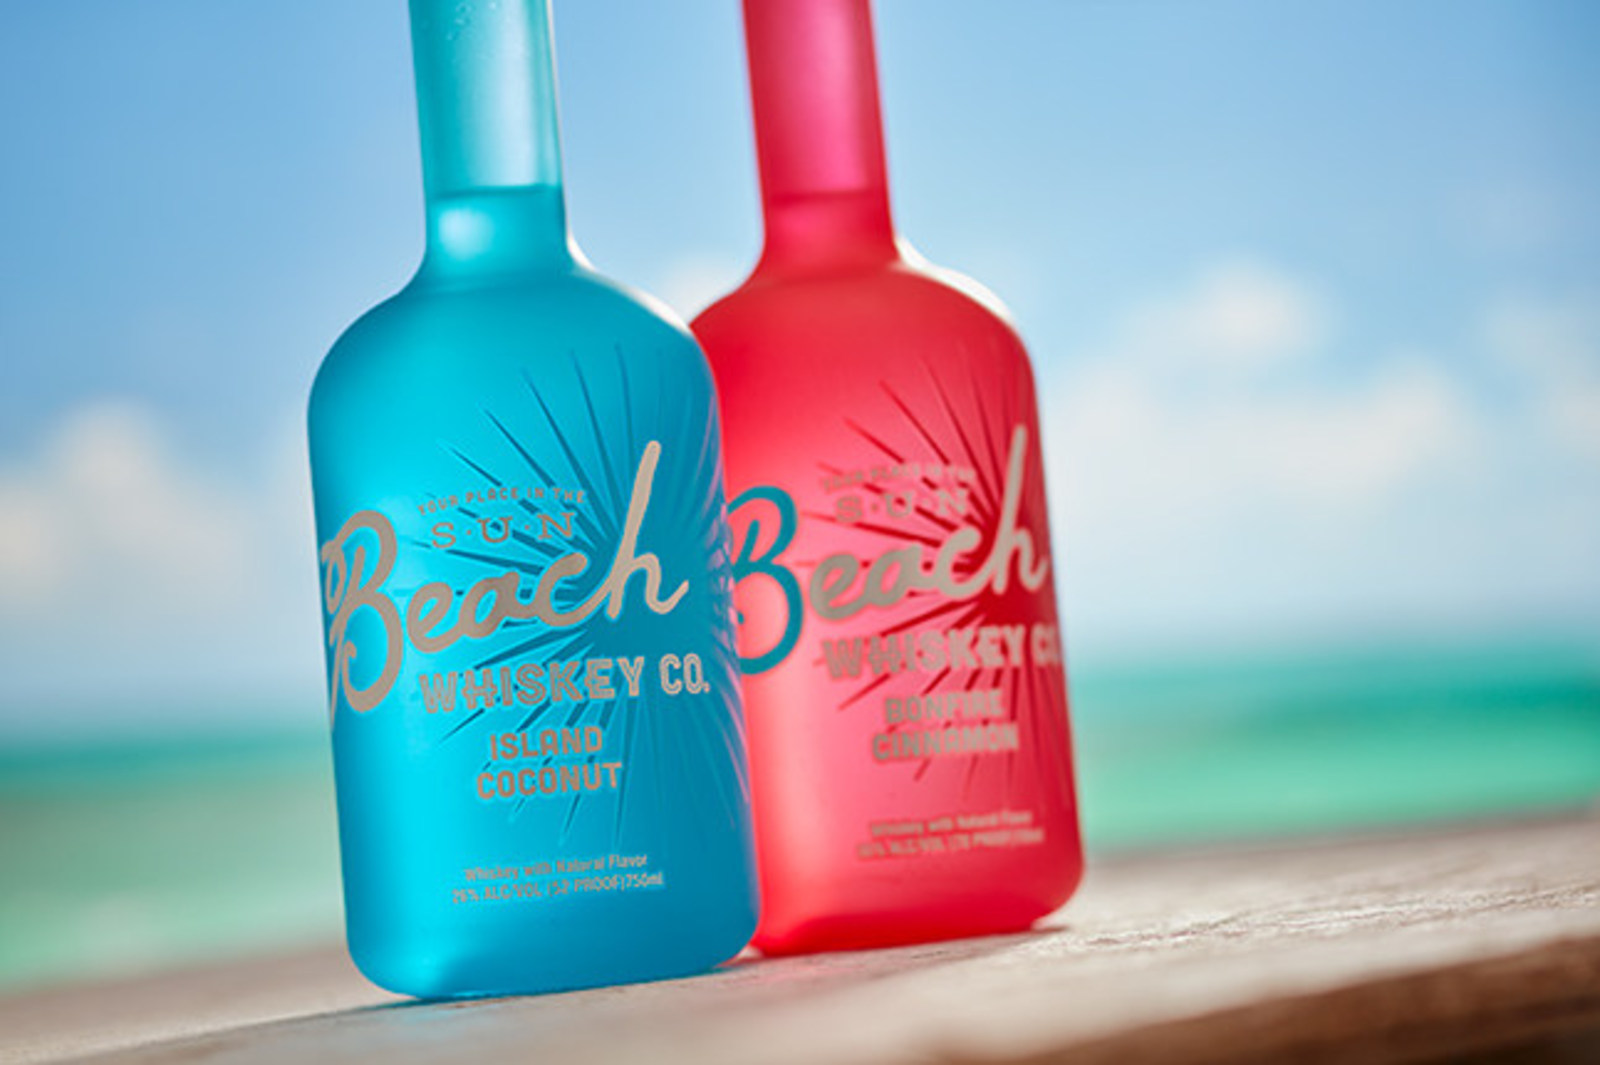 Beach Whiskey Company Gains National Distribution